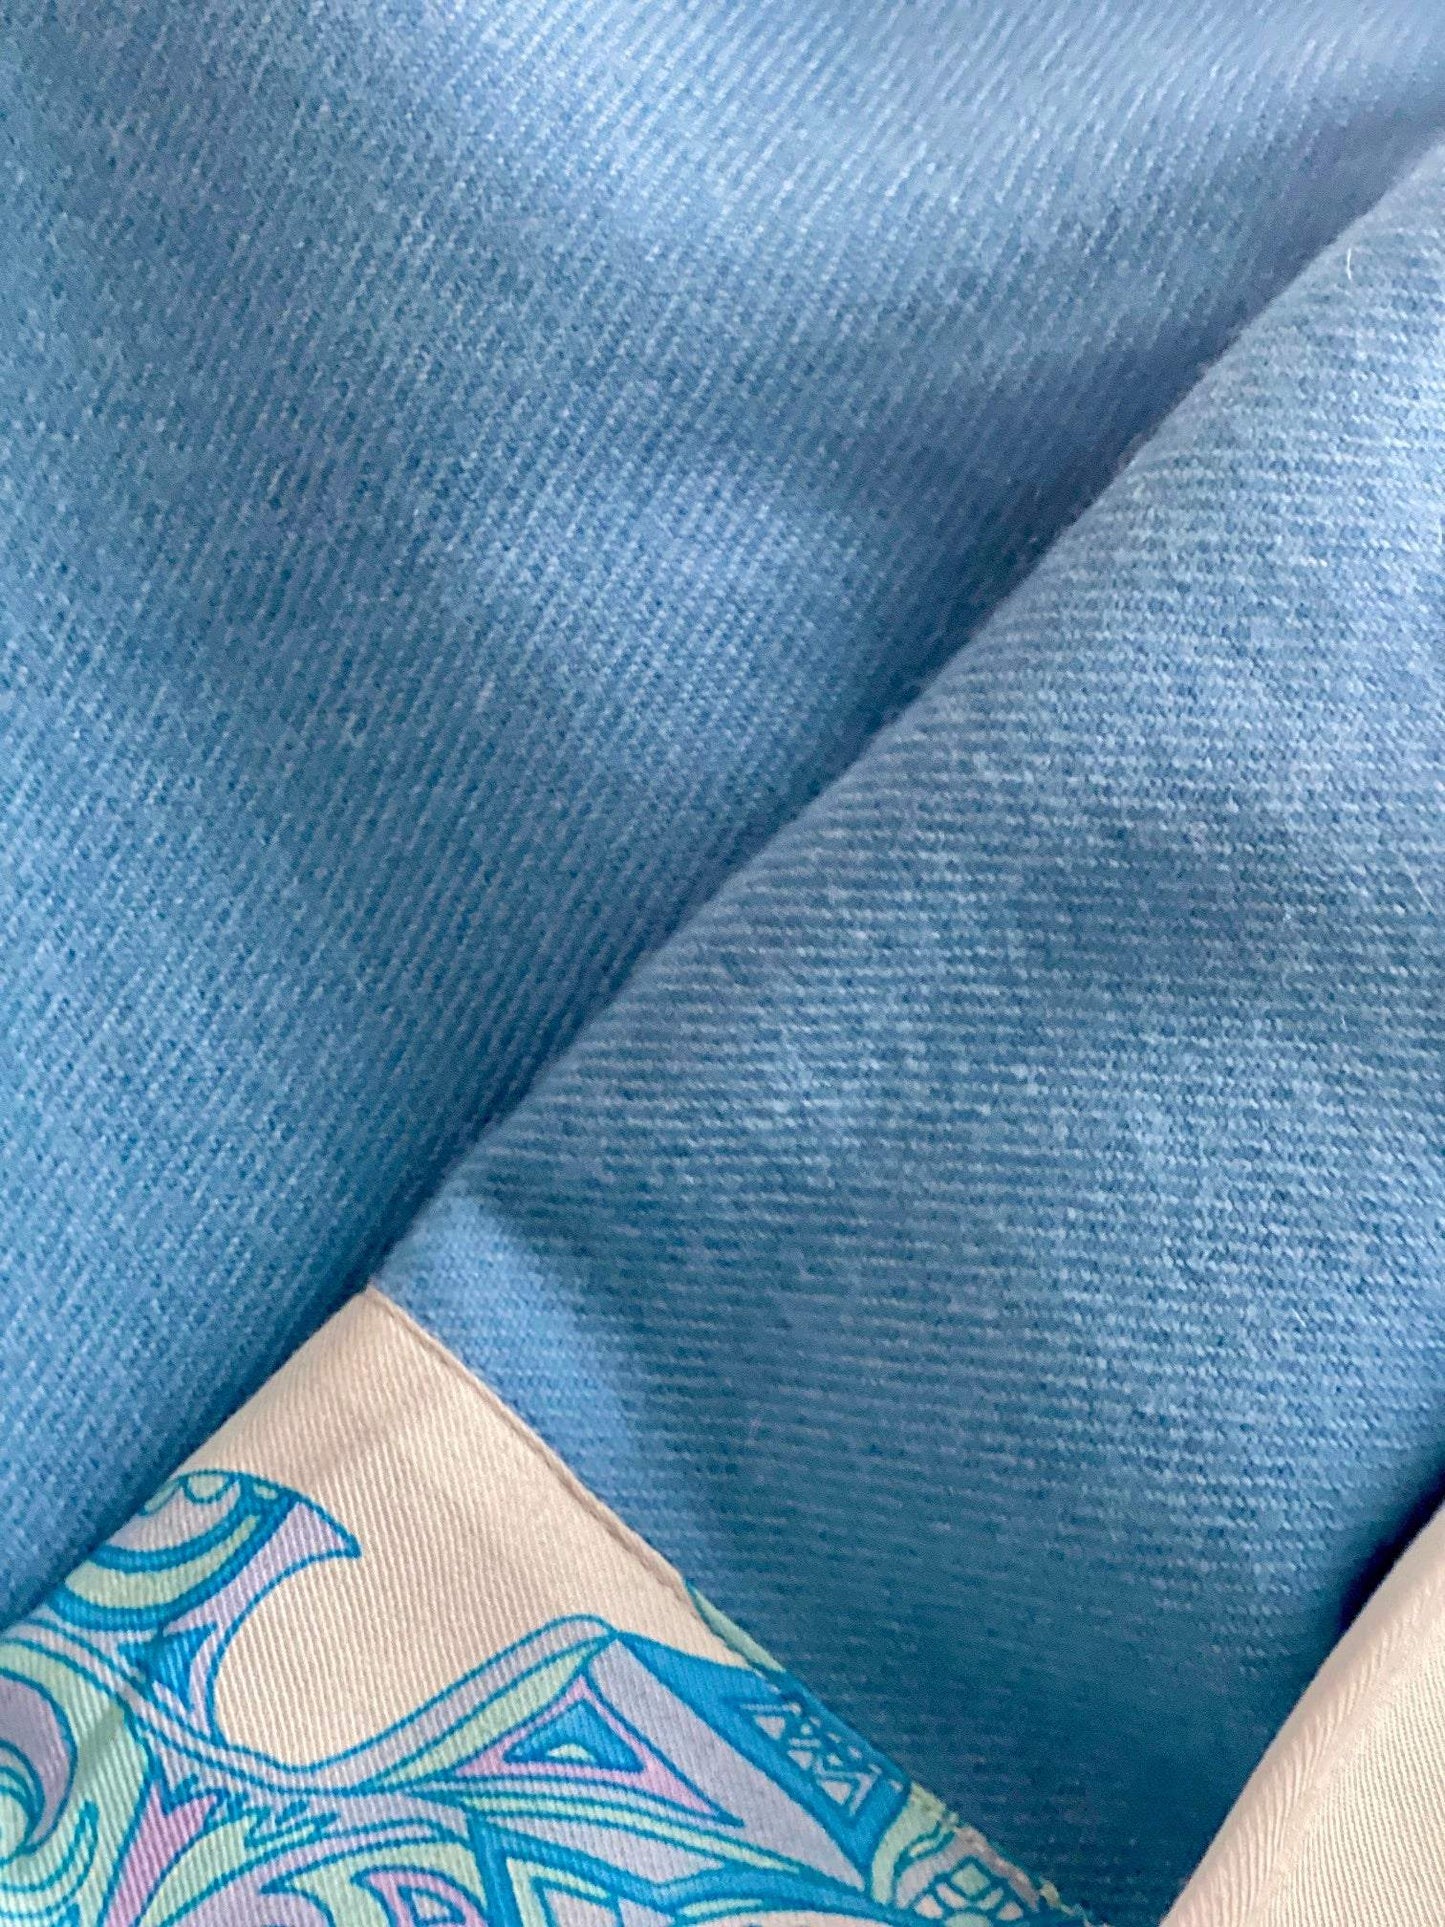 Plaid ESVARA TURTLES on silk, Twill weave Kaschmir, blau, 200 x 150 cm